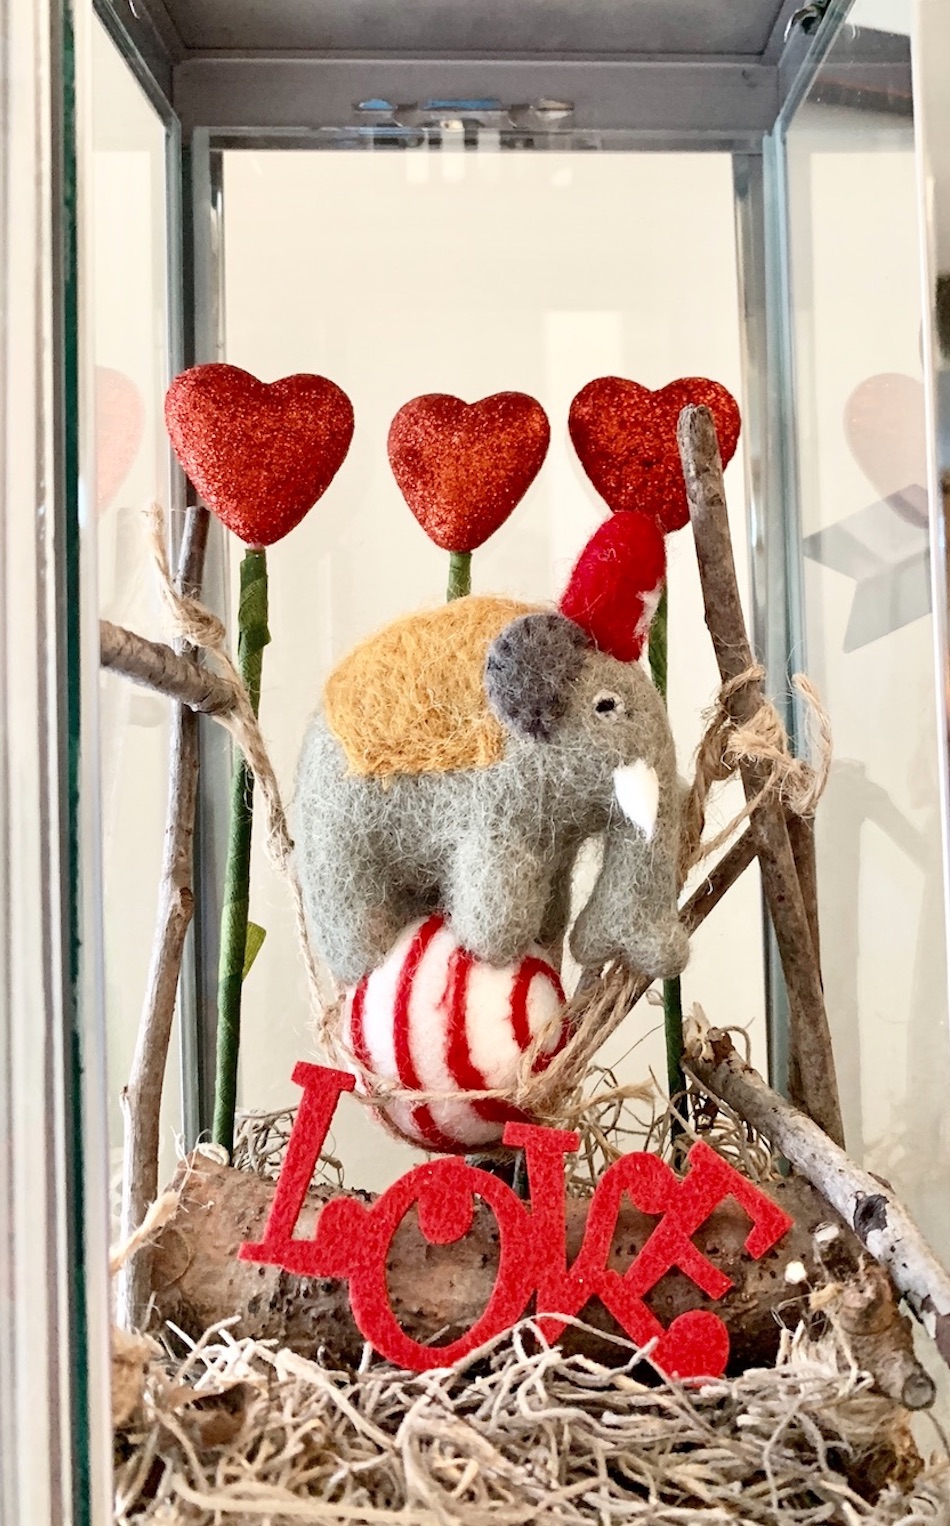 Valentine’s Day Home Decor Lovable Elephant Balancing Act Lantern #Farmhouse #Affordable #SimpleDecor #QuickAndEasy #BudgetFriendly #Valentine #ValentinesDay #DIY #StValentinesDecor #FarmhouseDecor